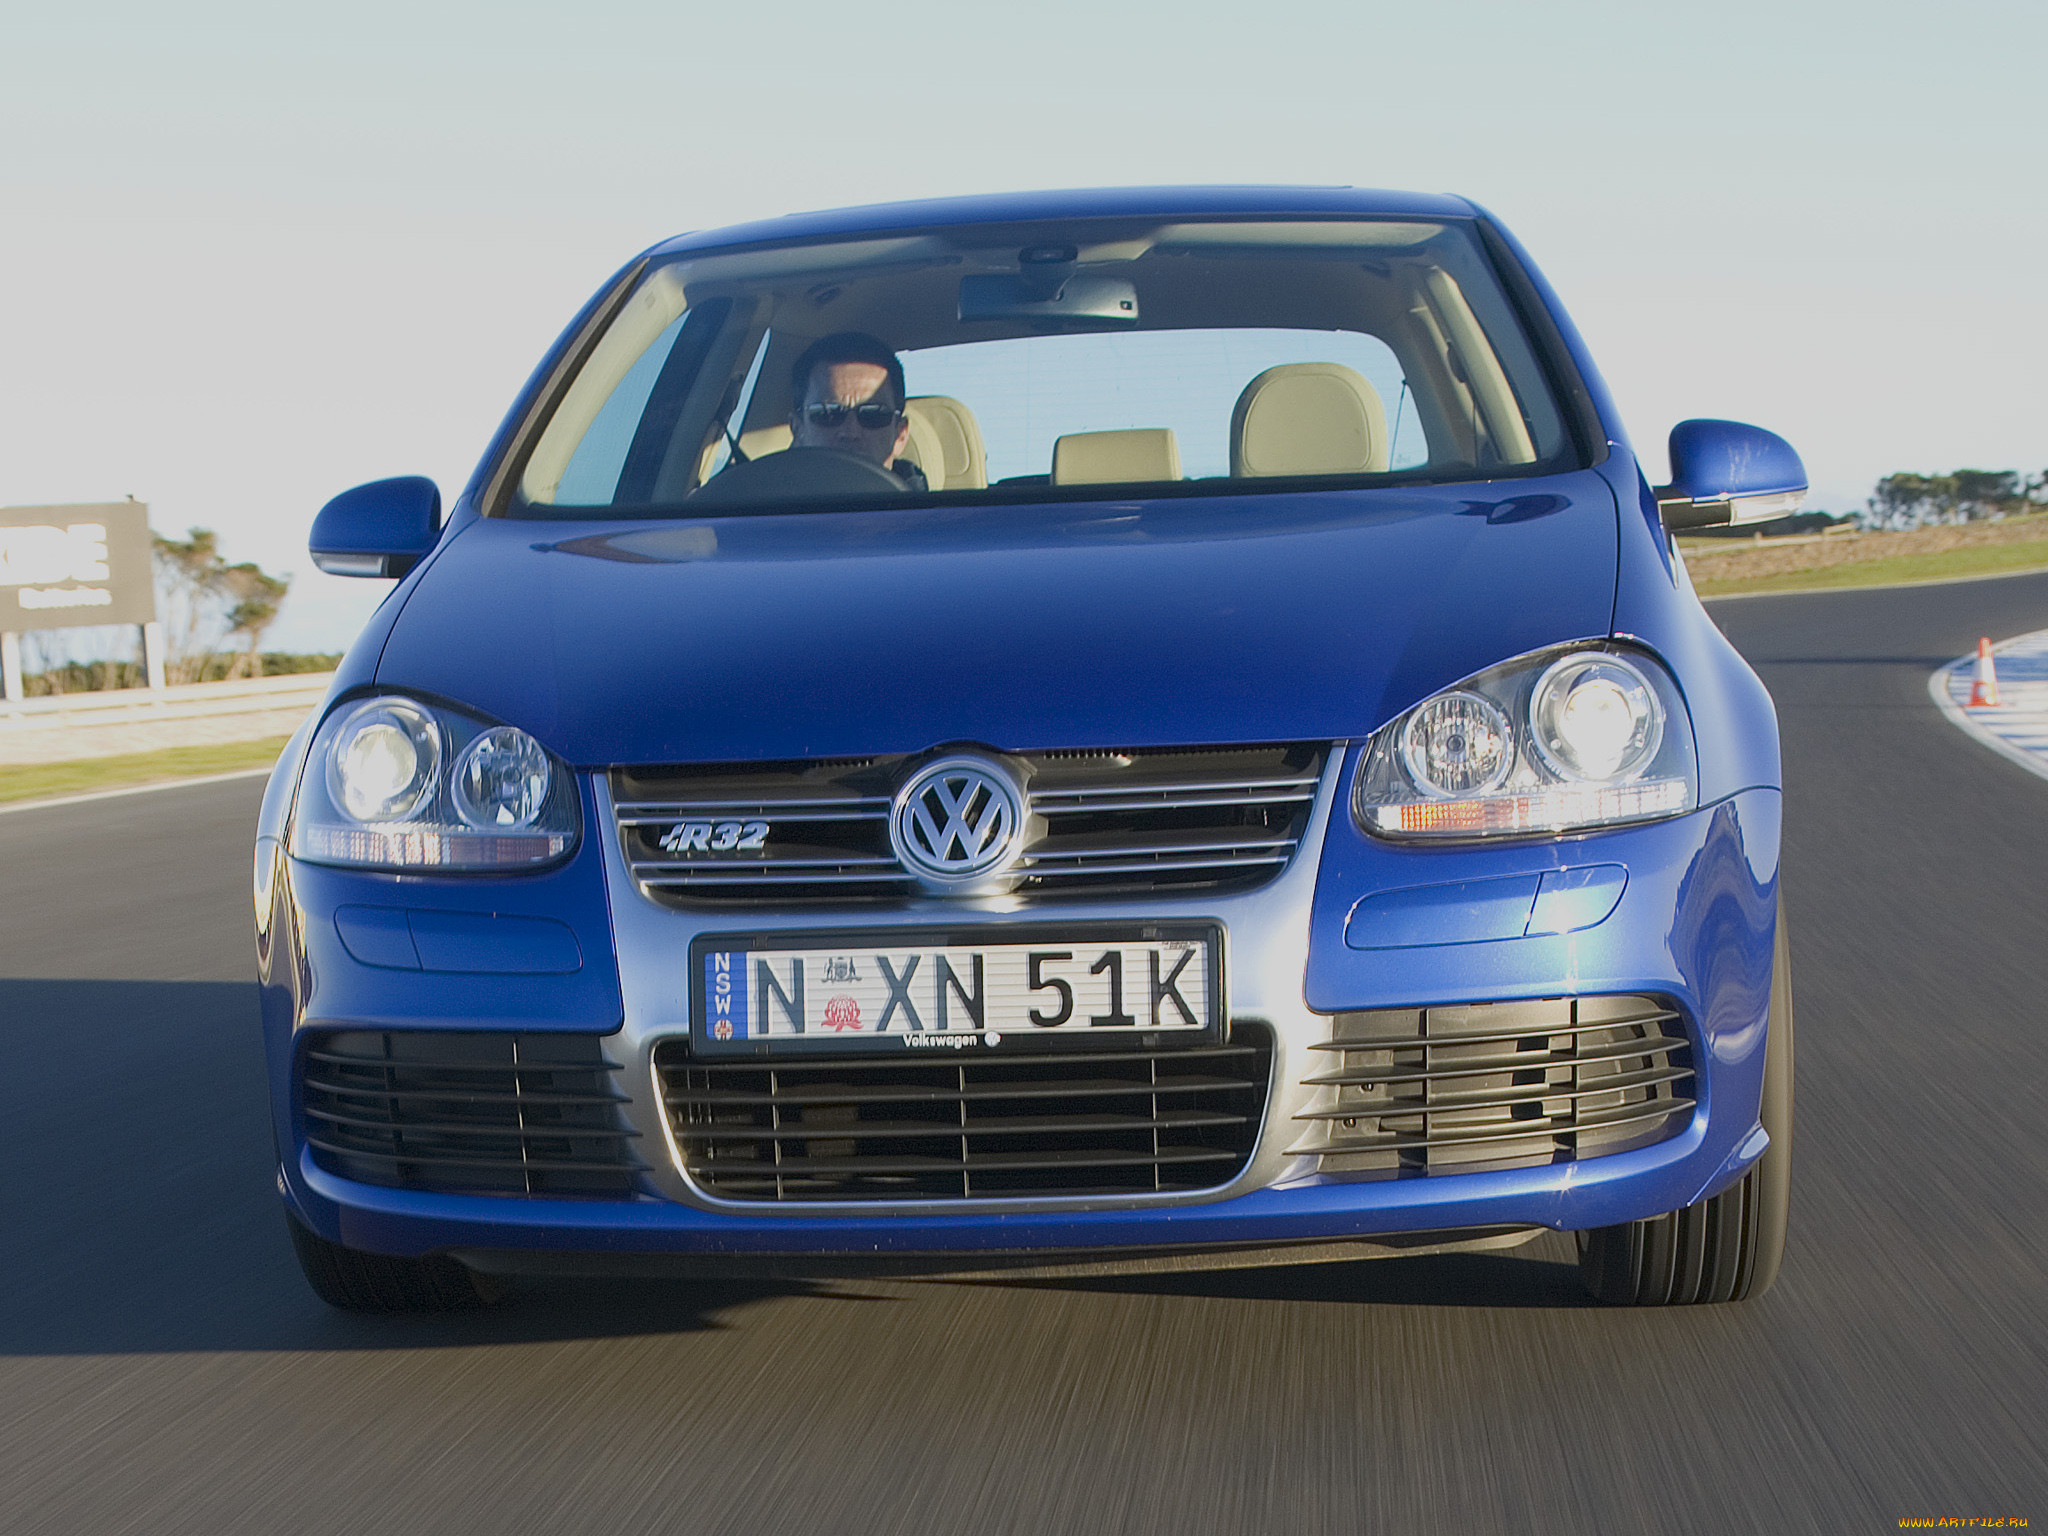 Volkswagen синий. VW Golf синий. Синяя машина VW Golf. Синий цвет автомобиля Фольксваген.